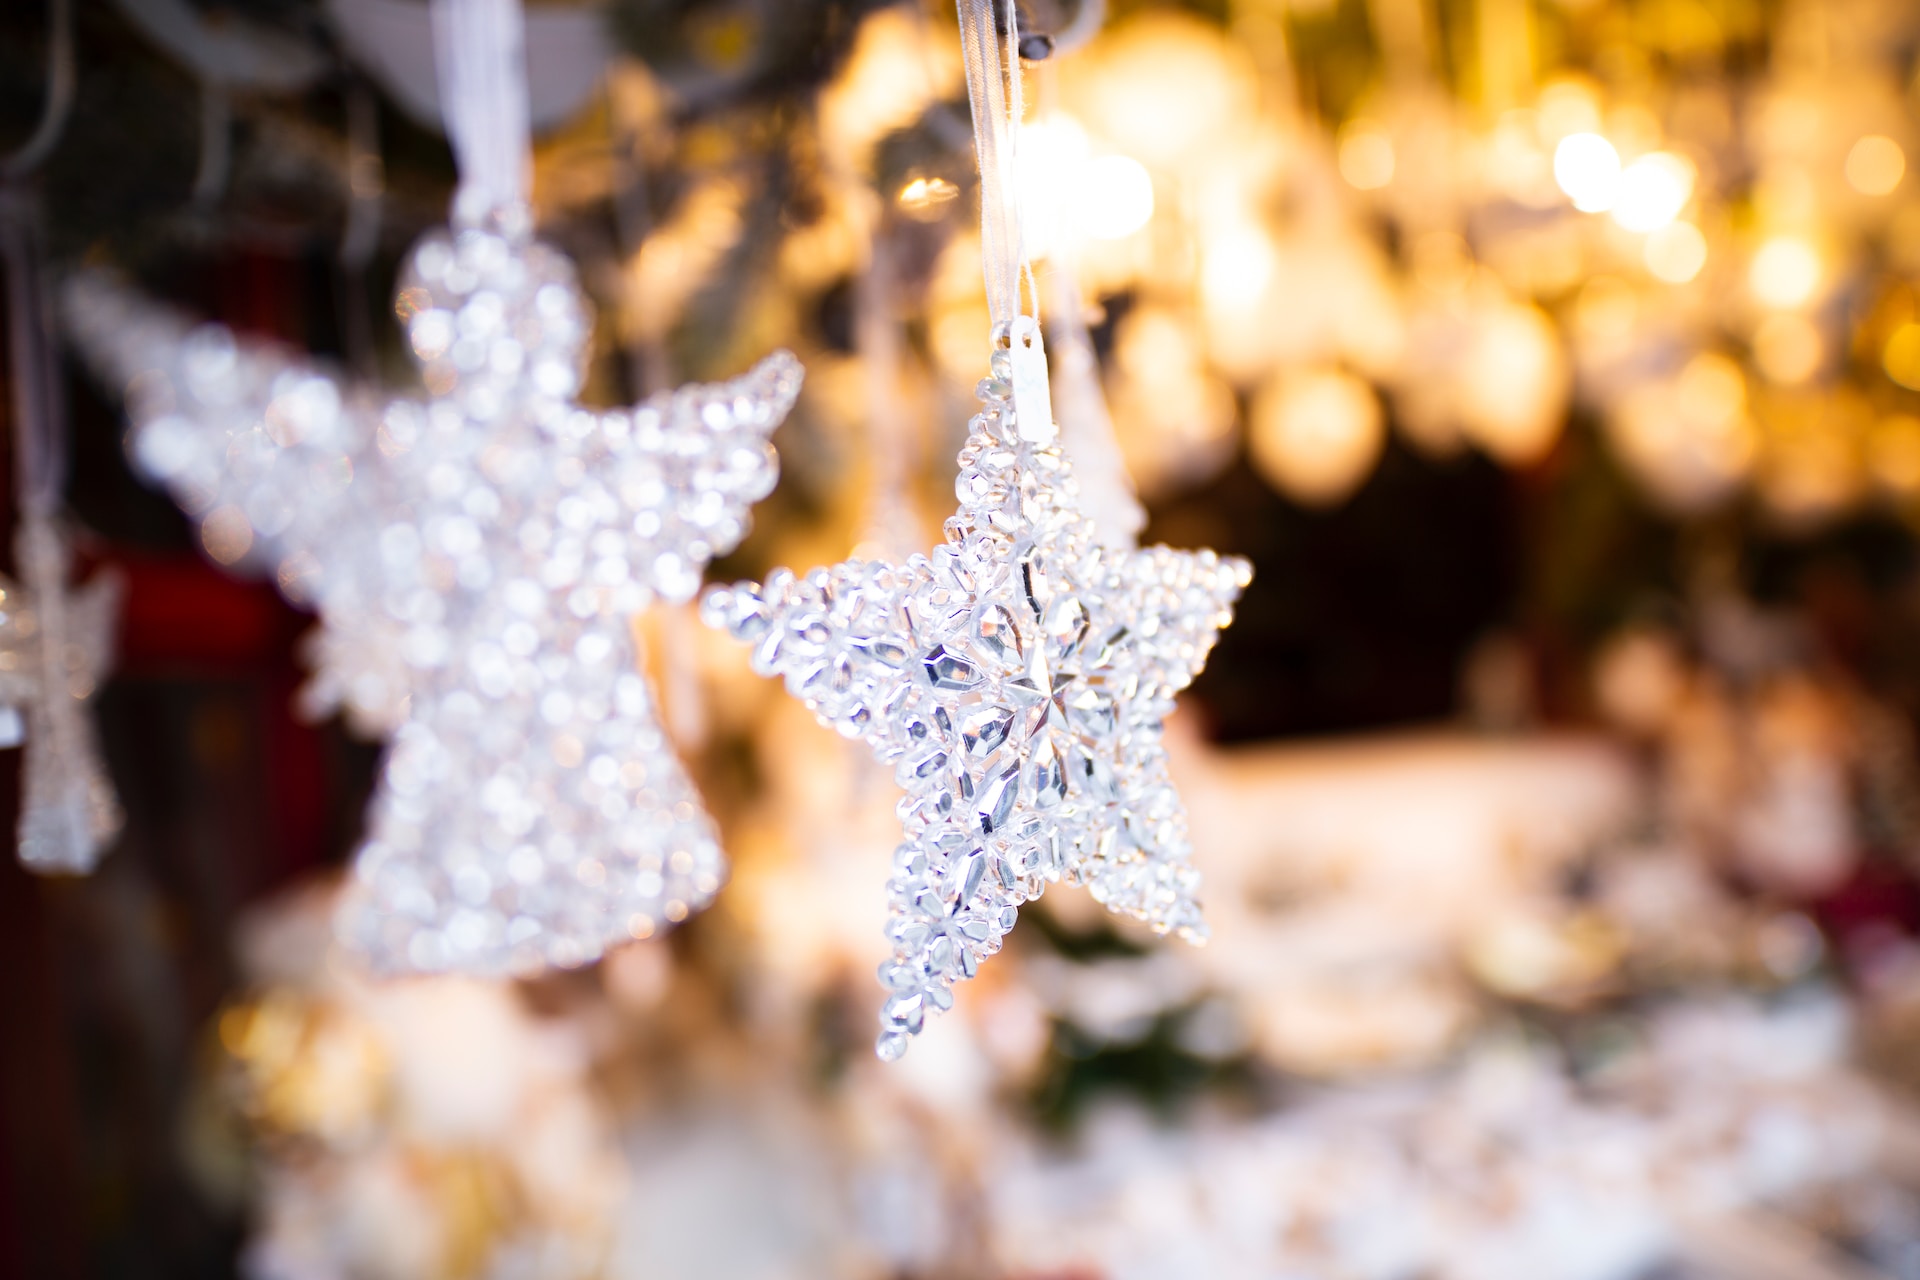 Cambridge Christmas Markets: Celebrate the Festive Season in Style